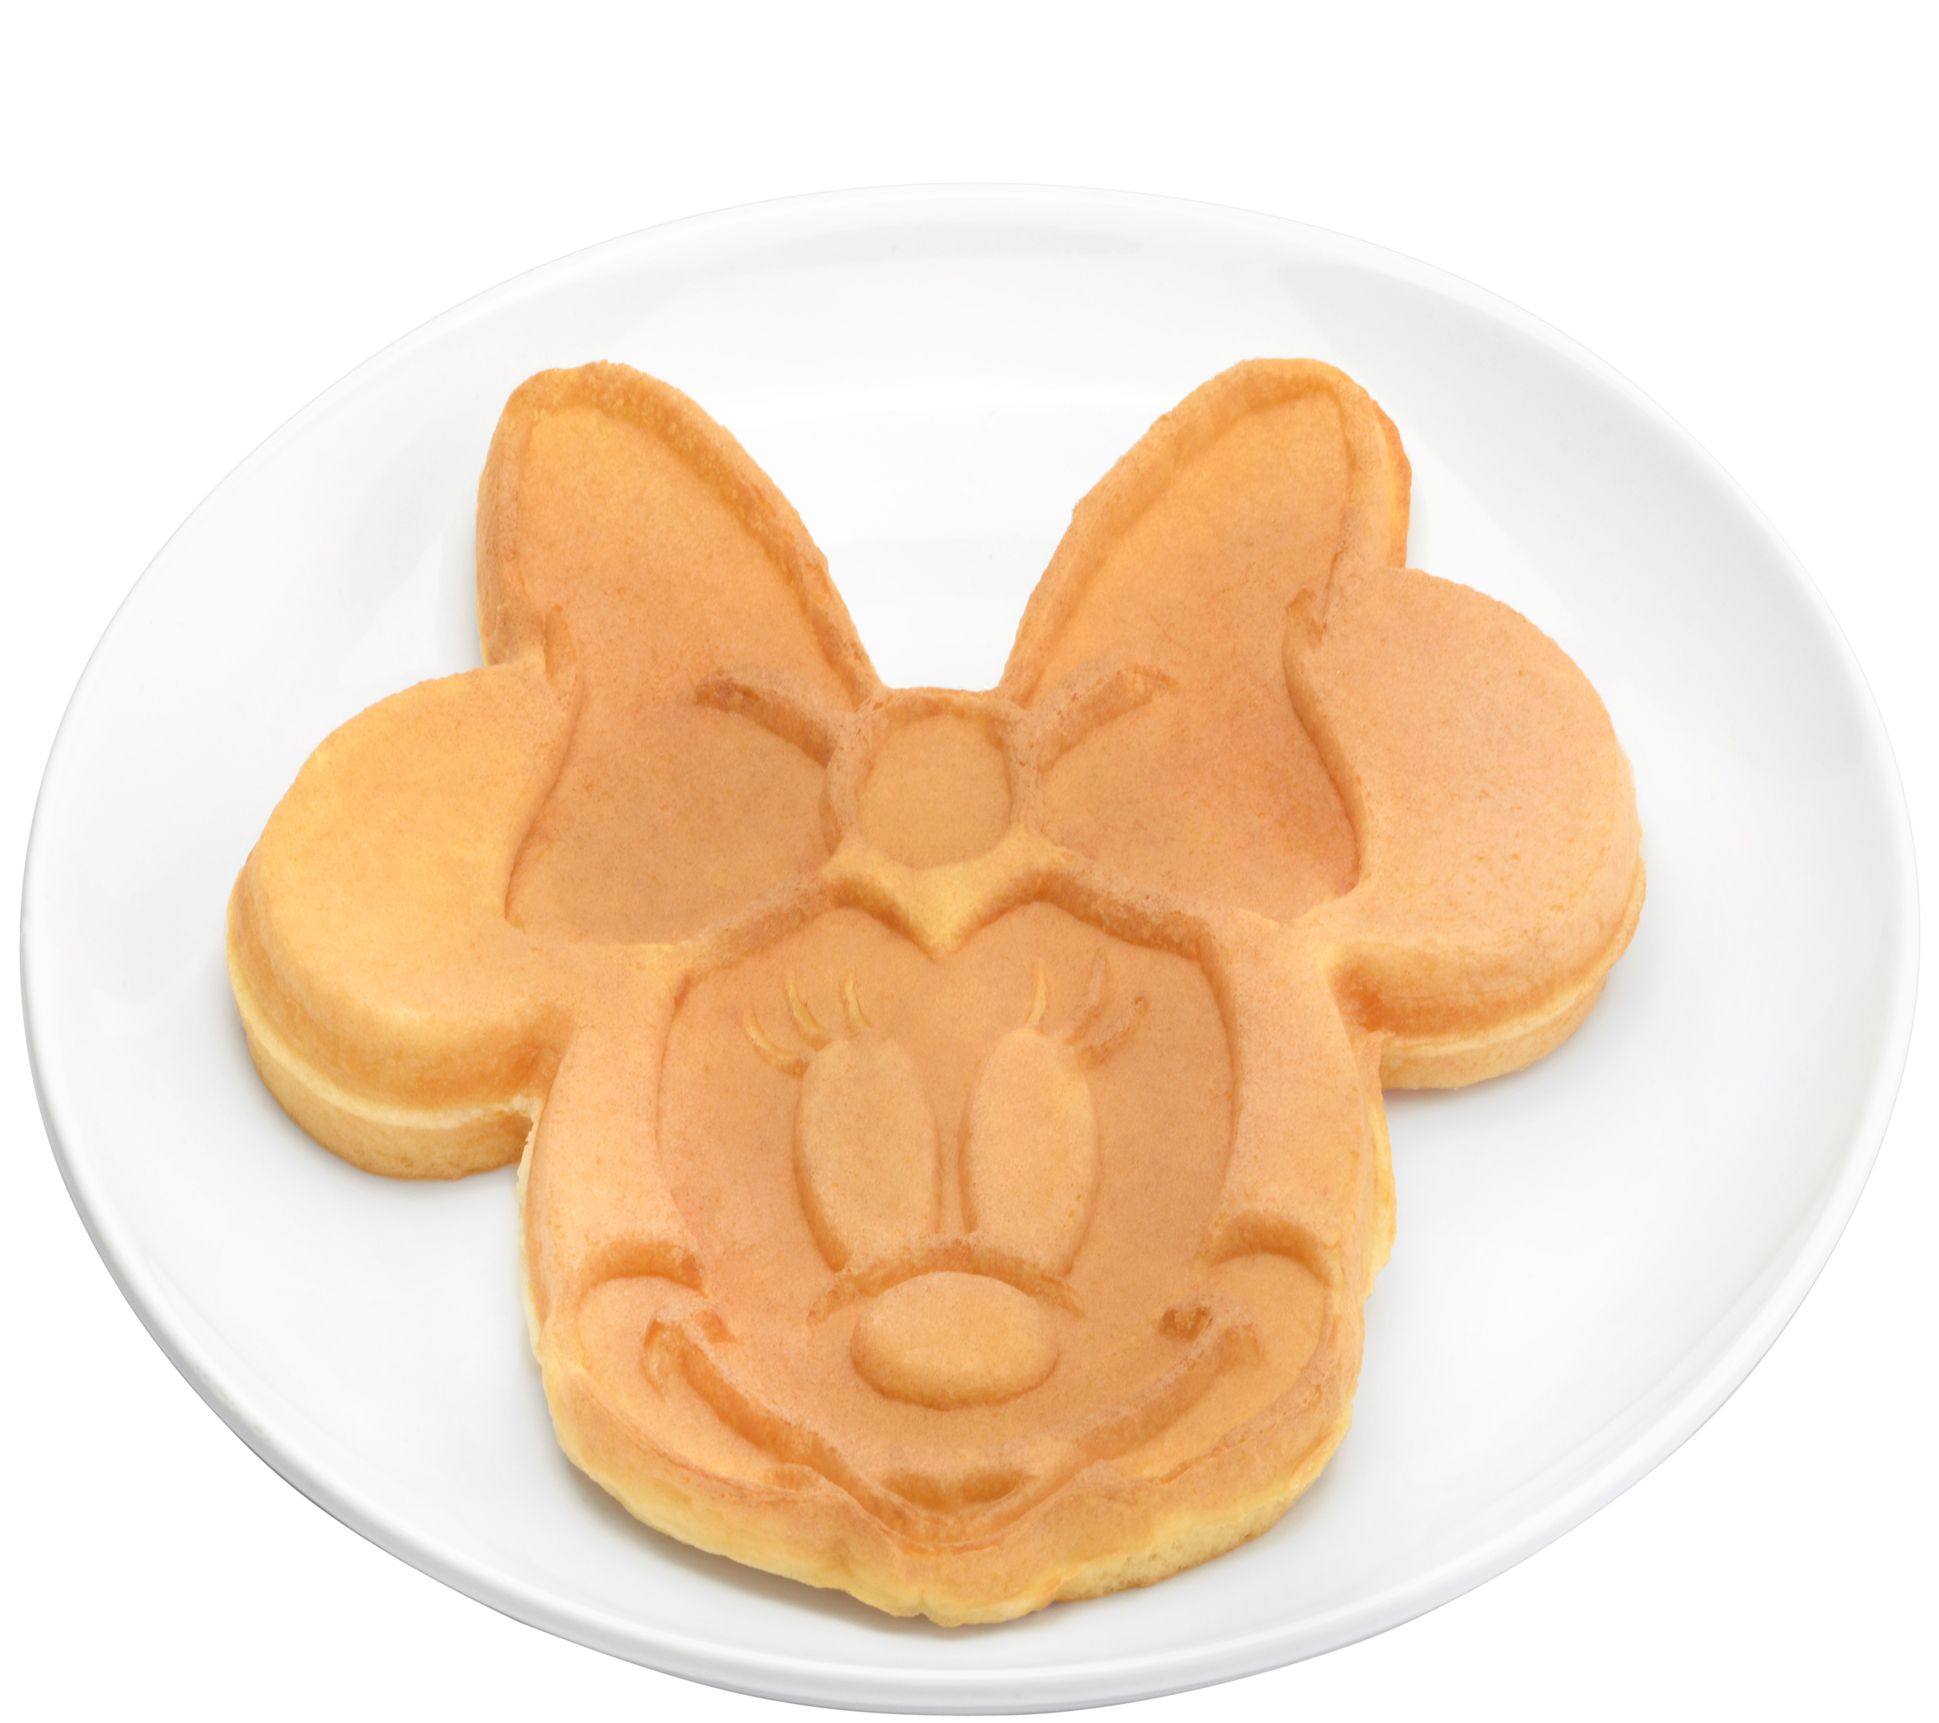 Minnie Mouse Waffle Maker